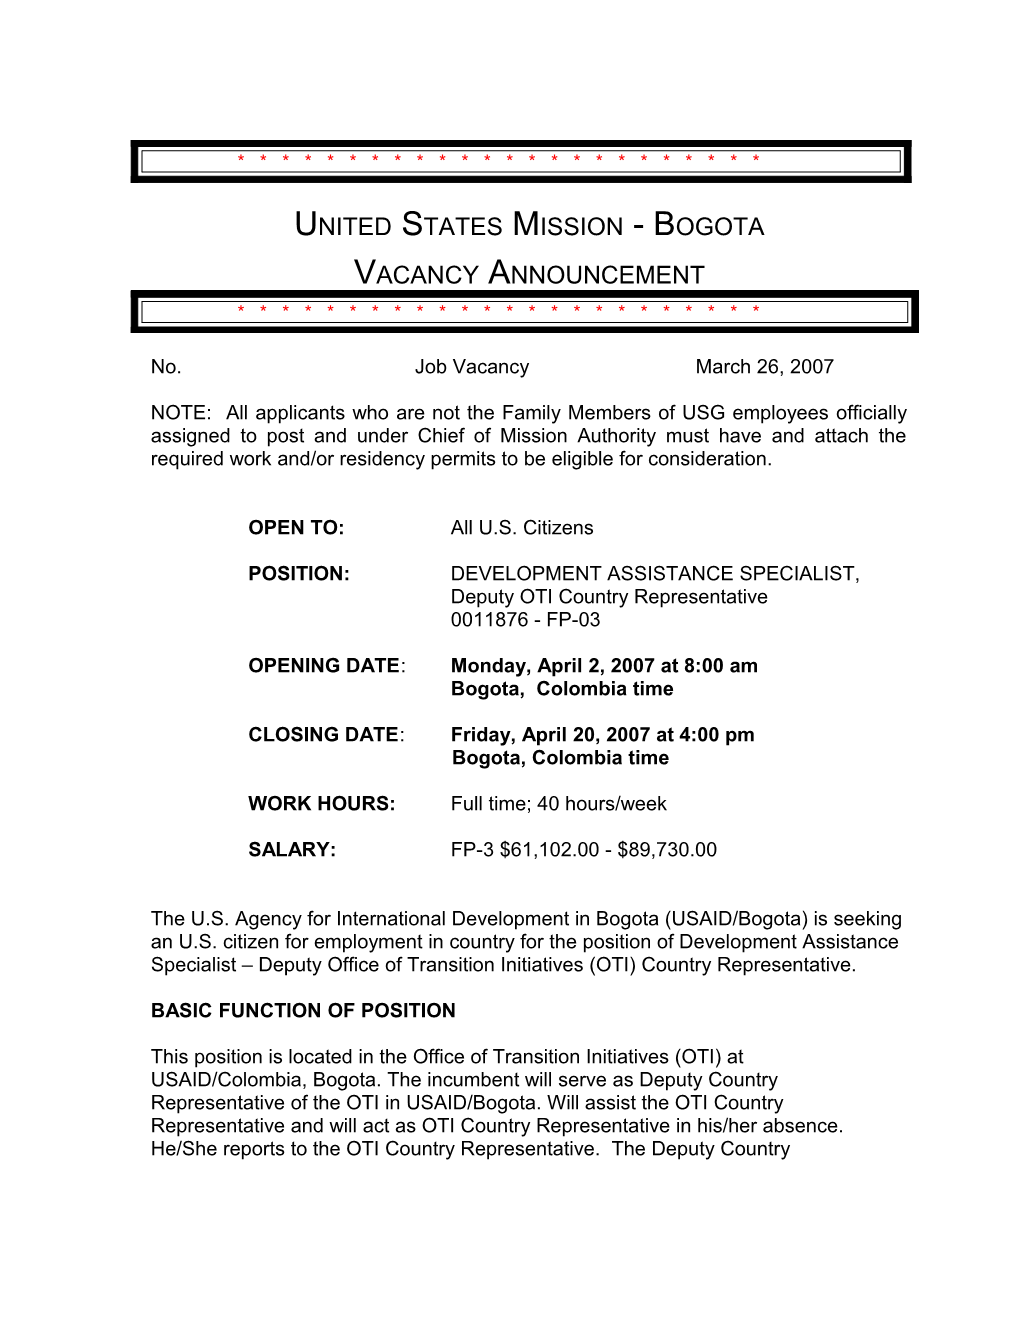 United States Mission- Bogota